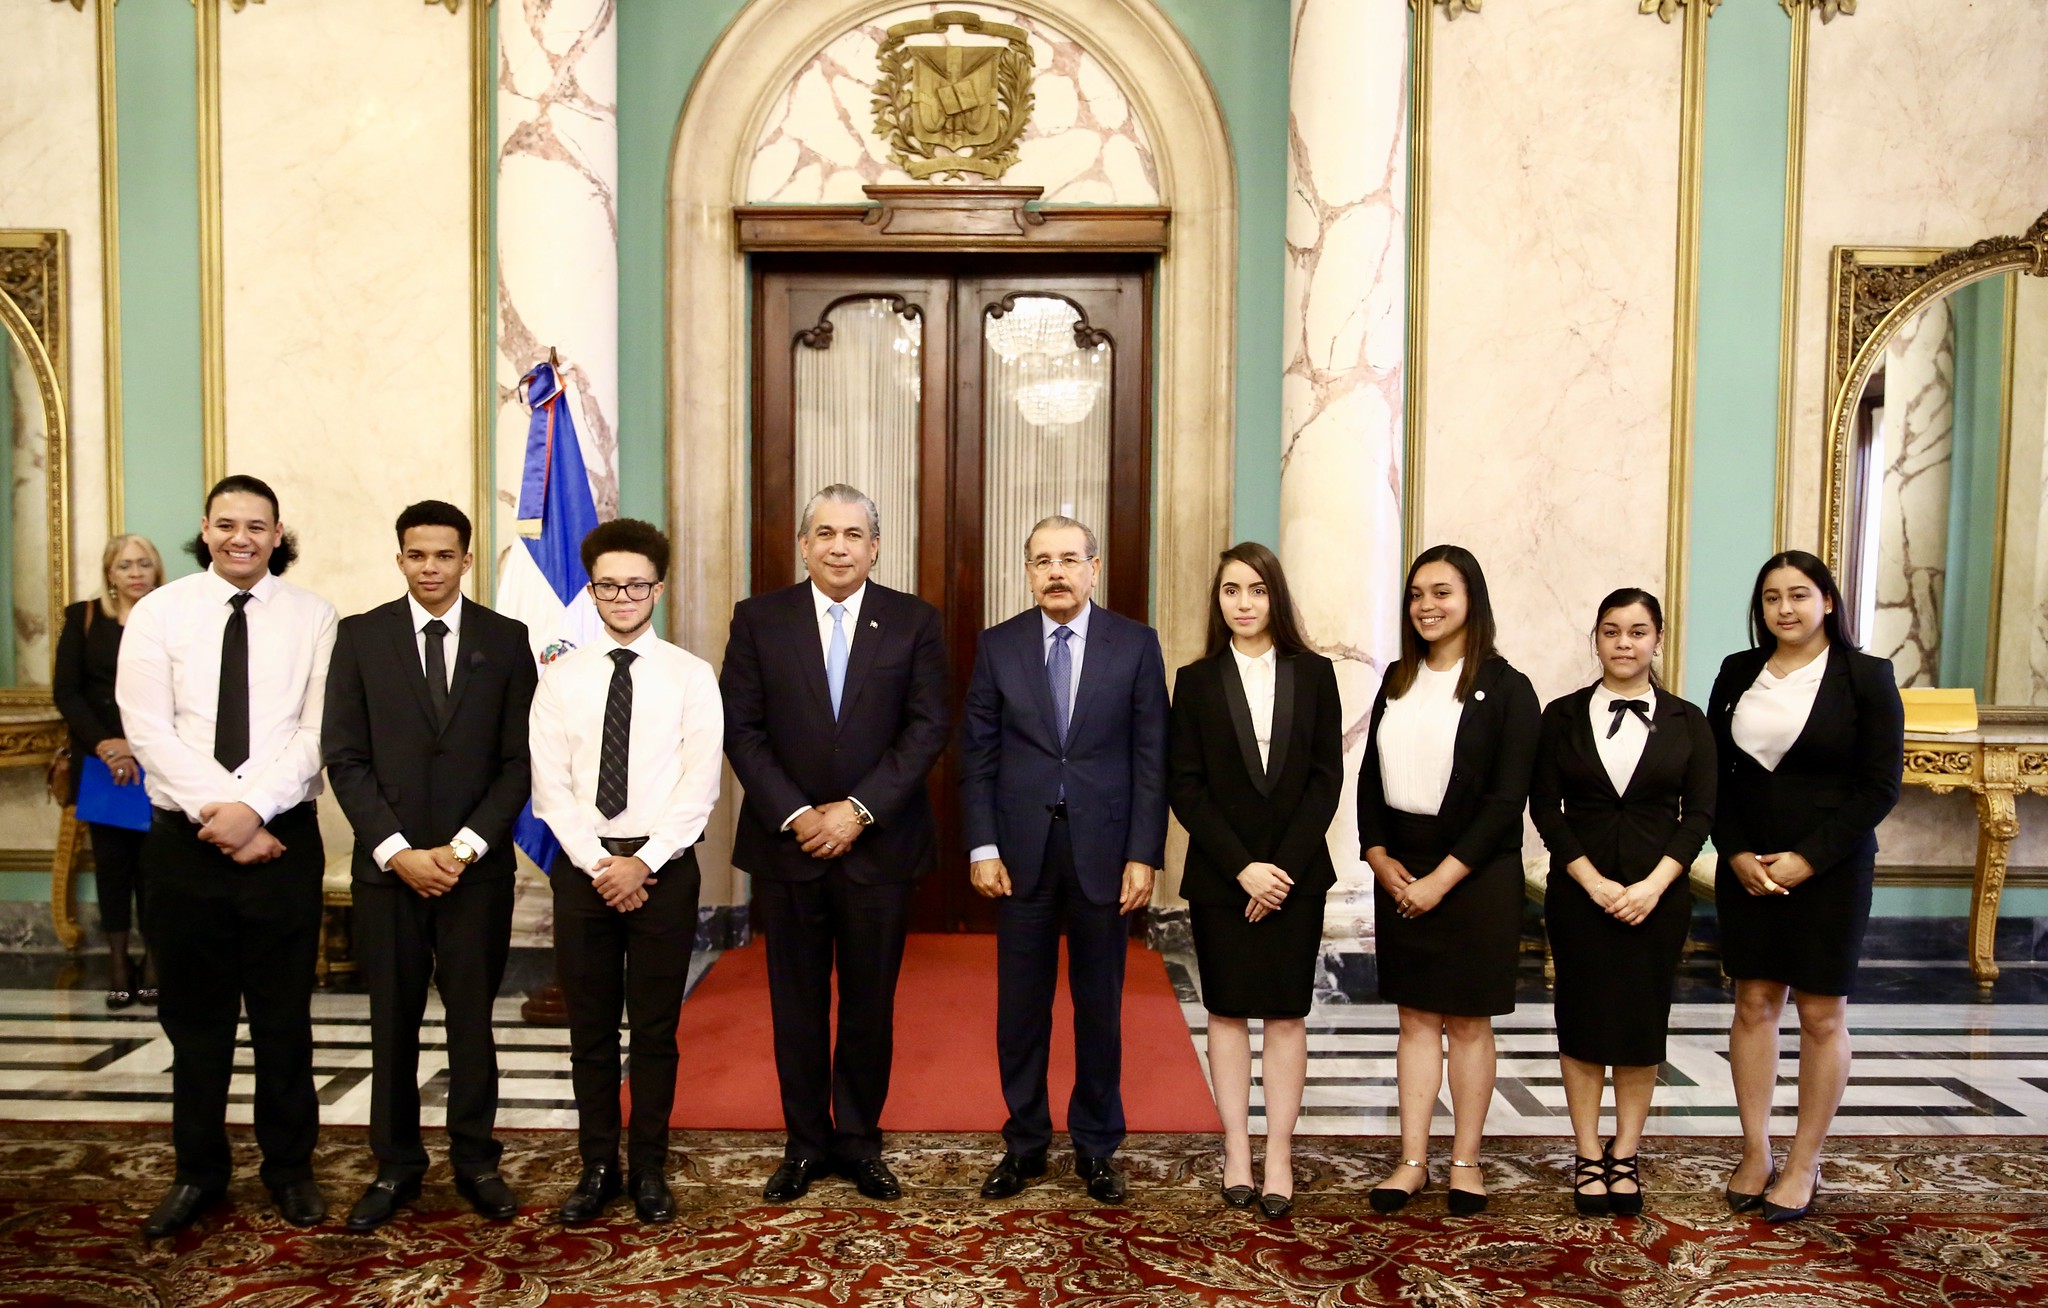 REPÚBLICA DOMINICANA: Presidente Danilo Medina ofrece cálido recibimiento en Palacio Nacional a estudiantes meritorios dominicanos radicados en Estados Unidos